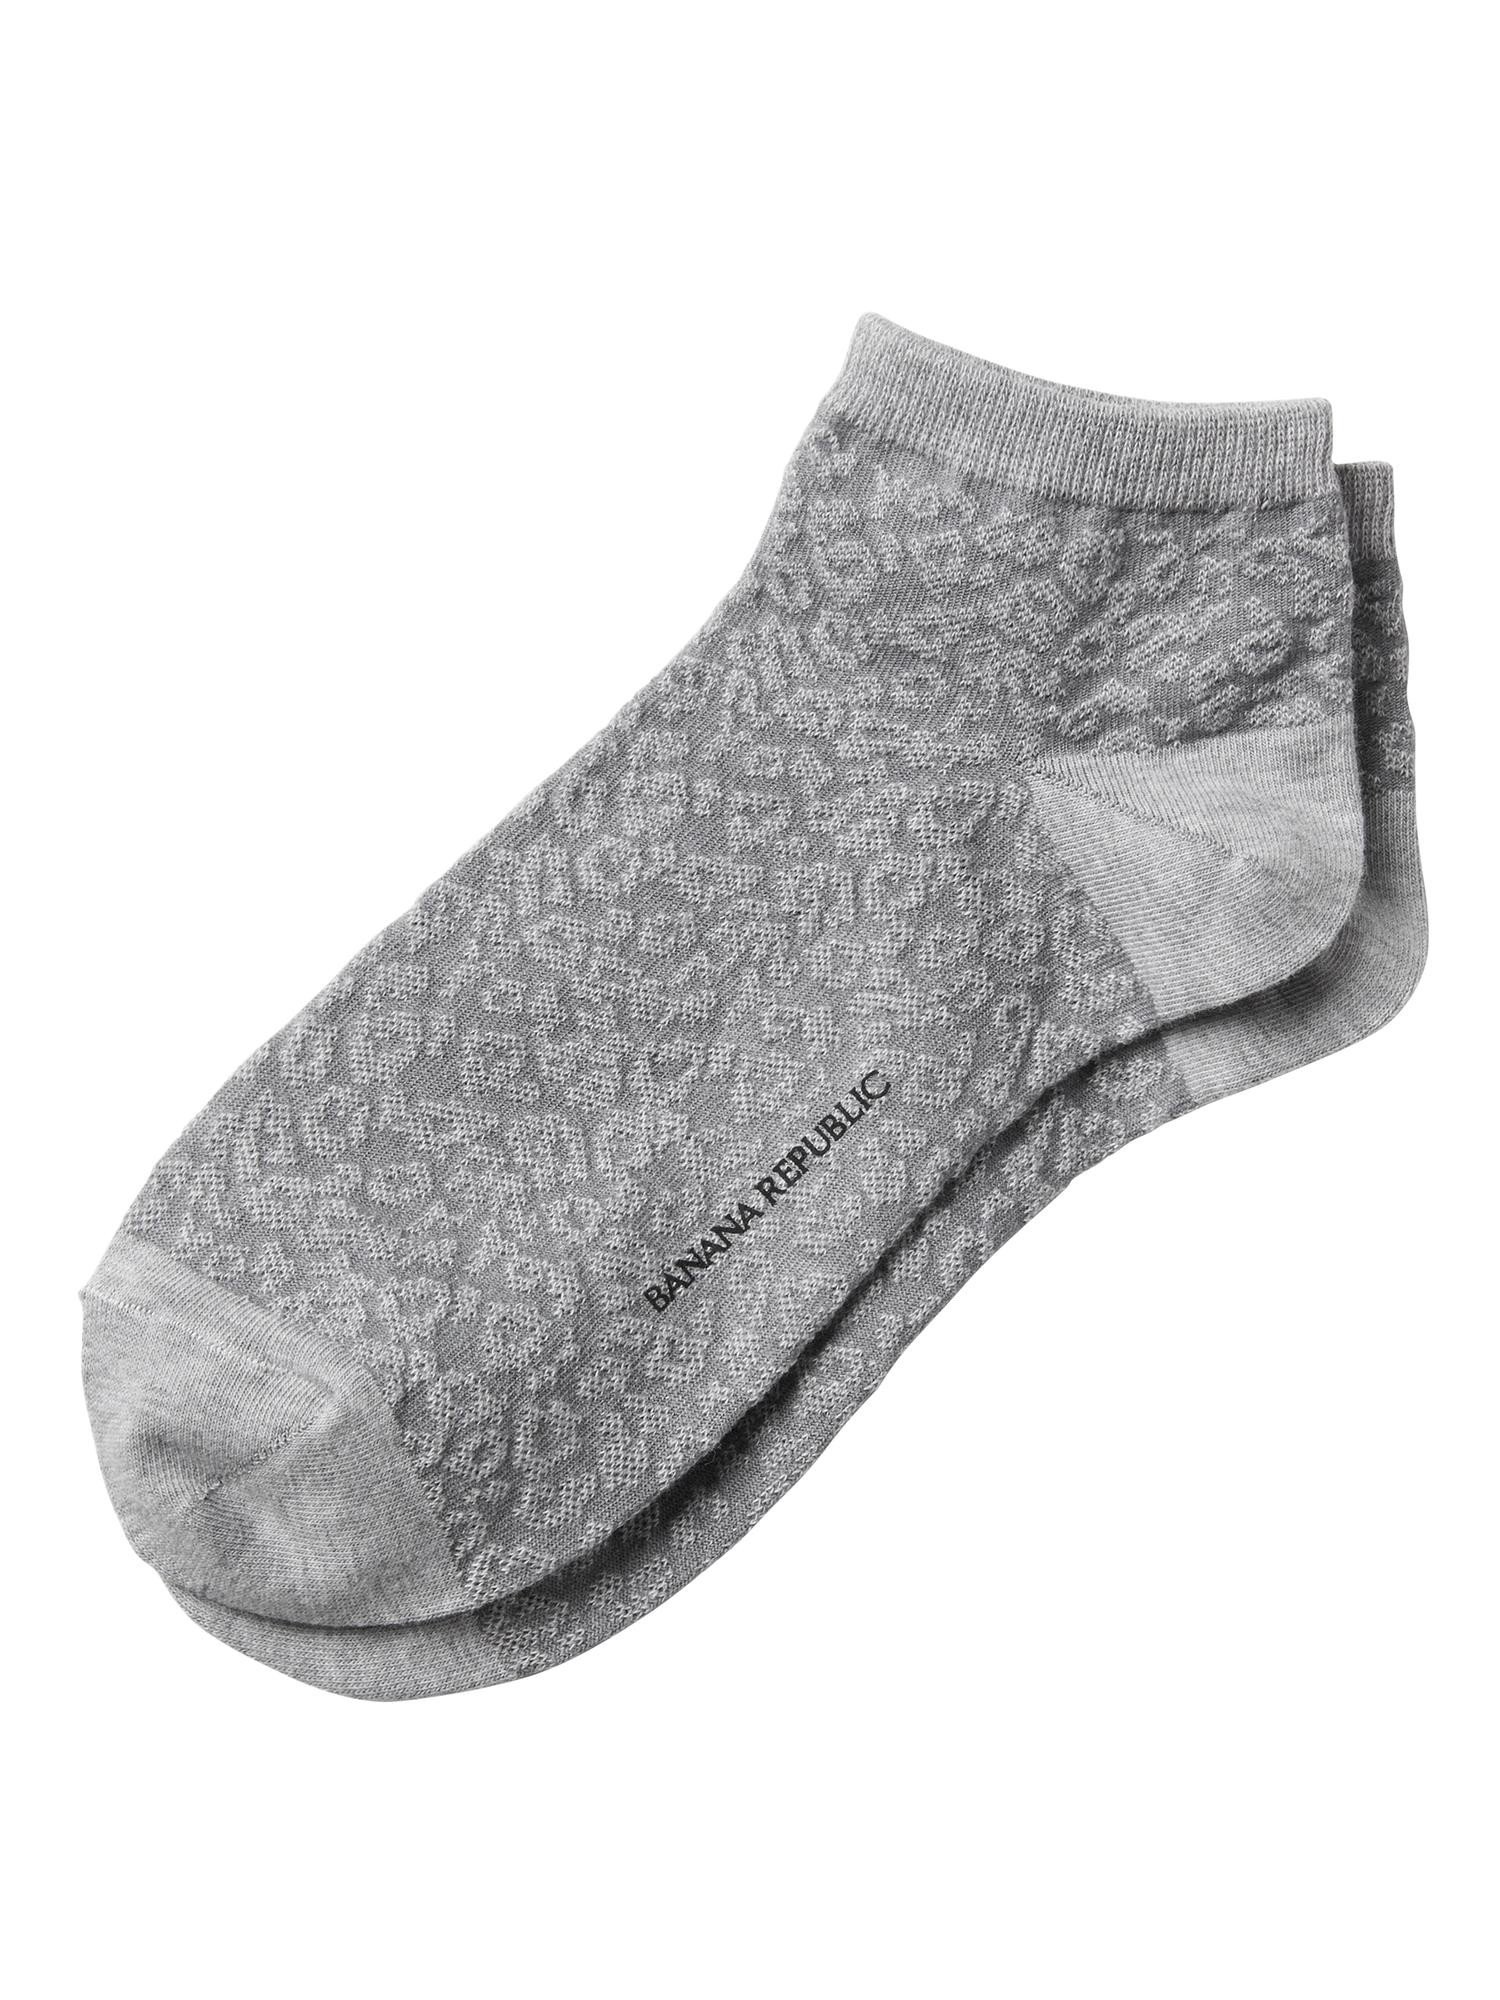 Desenli soket çorap product image